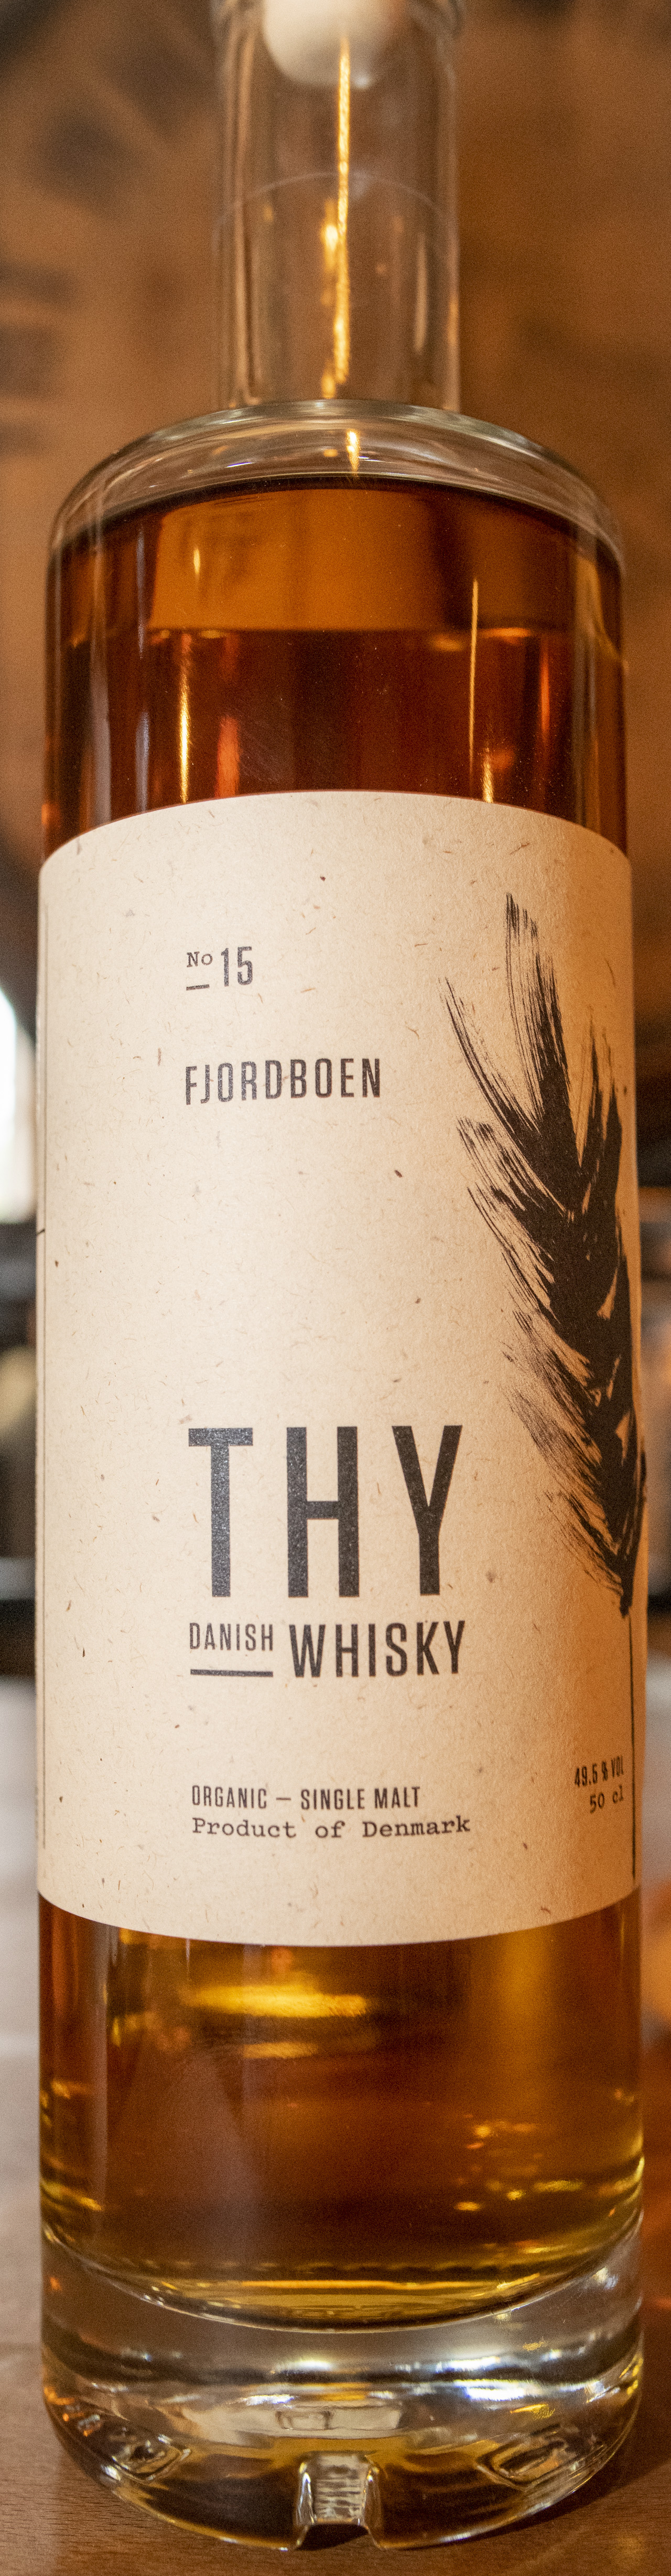 Billede: PHC_5911 - Thy Whisky No 15 Fjordboen.jpg